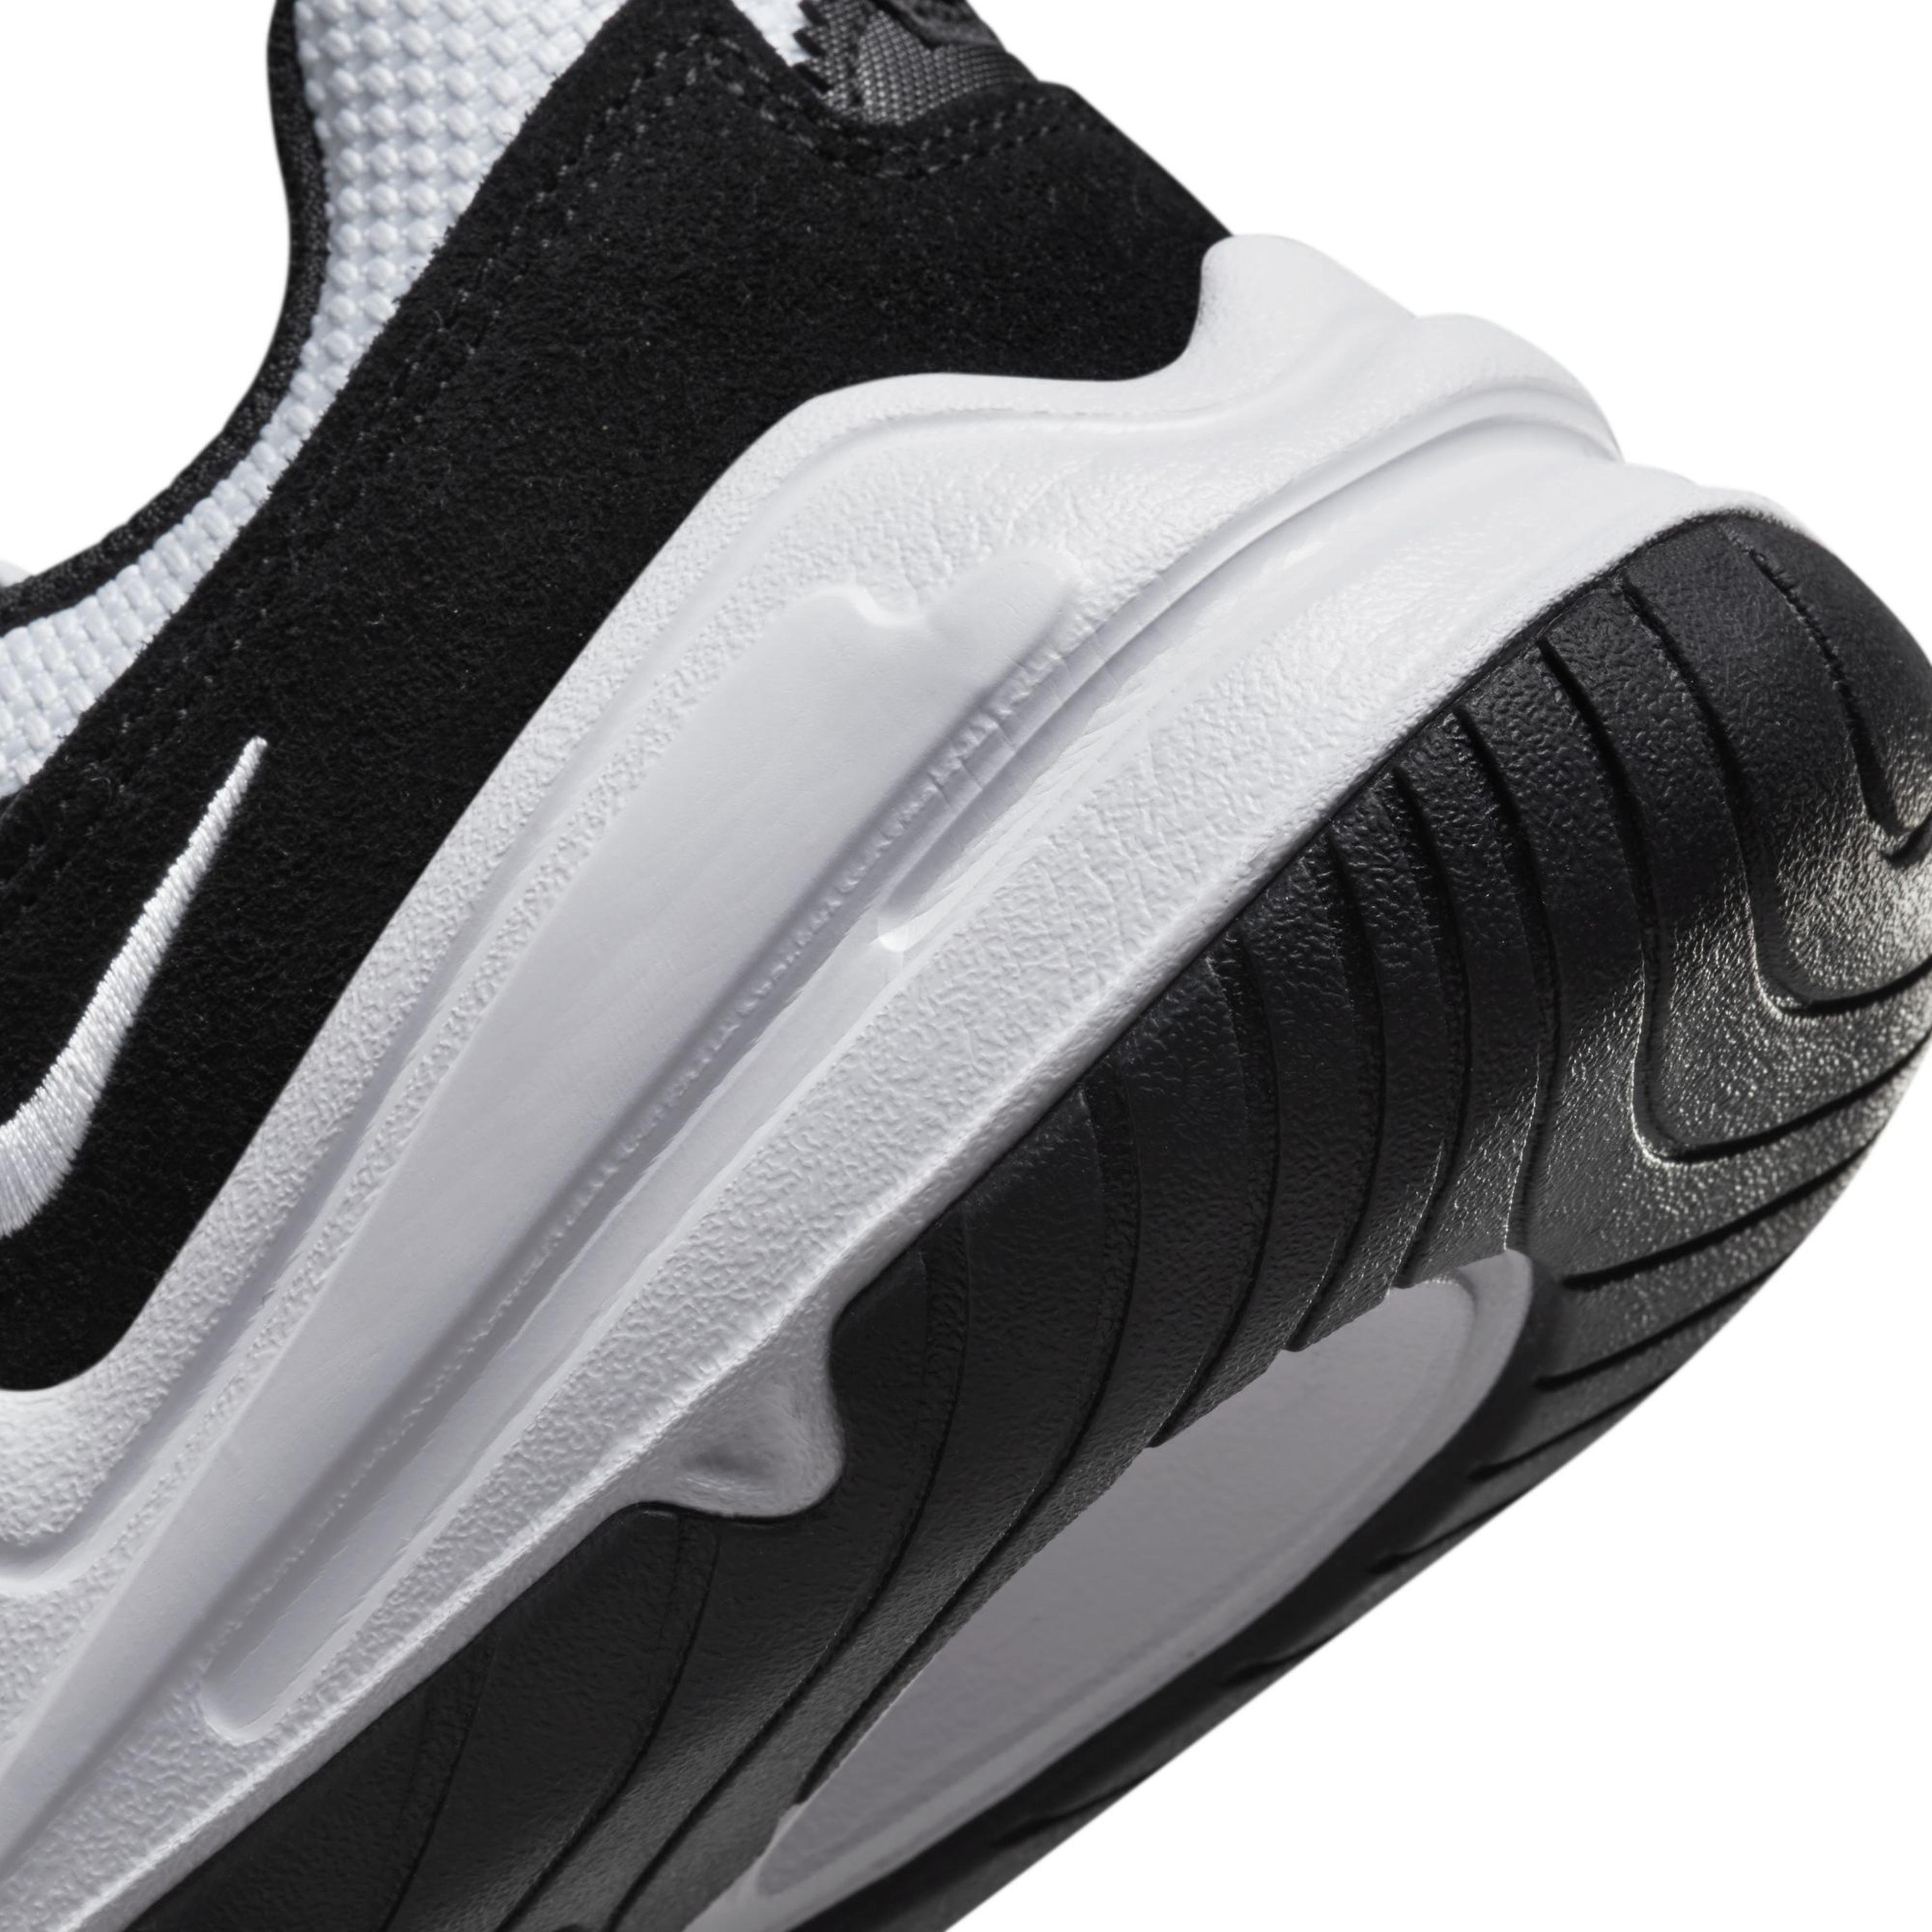 Nike Tech Hera Erkek Siyah/Beyaz Spor Ayakkabı